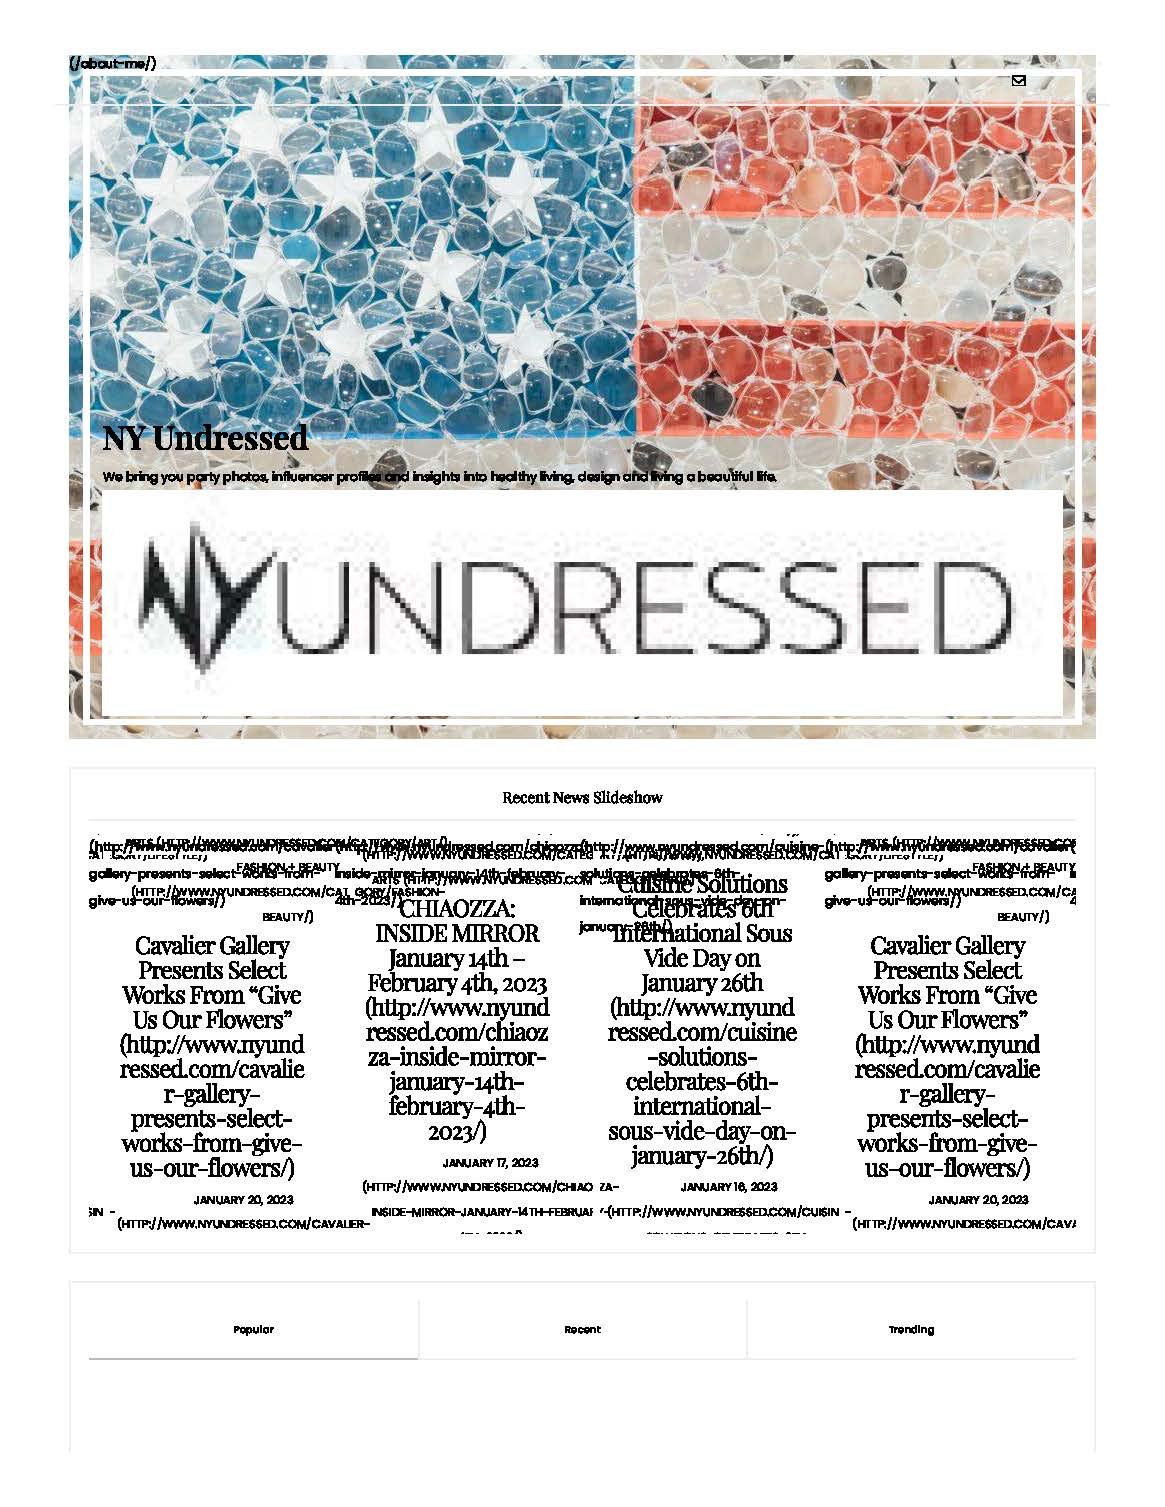 Michel Abboud - SOMA - NY Undressed - PRESS 2019 -7.jpg